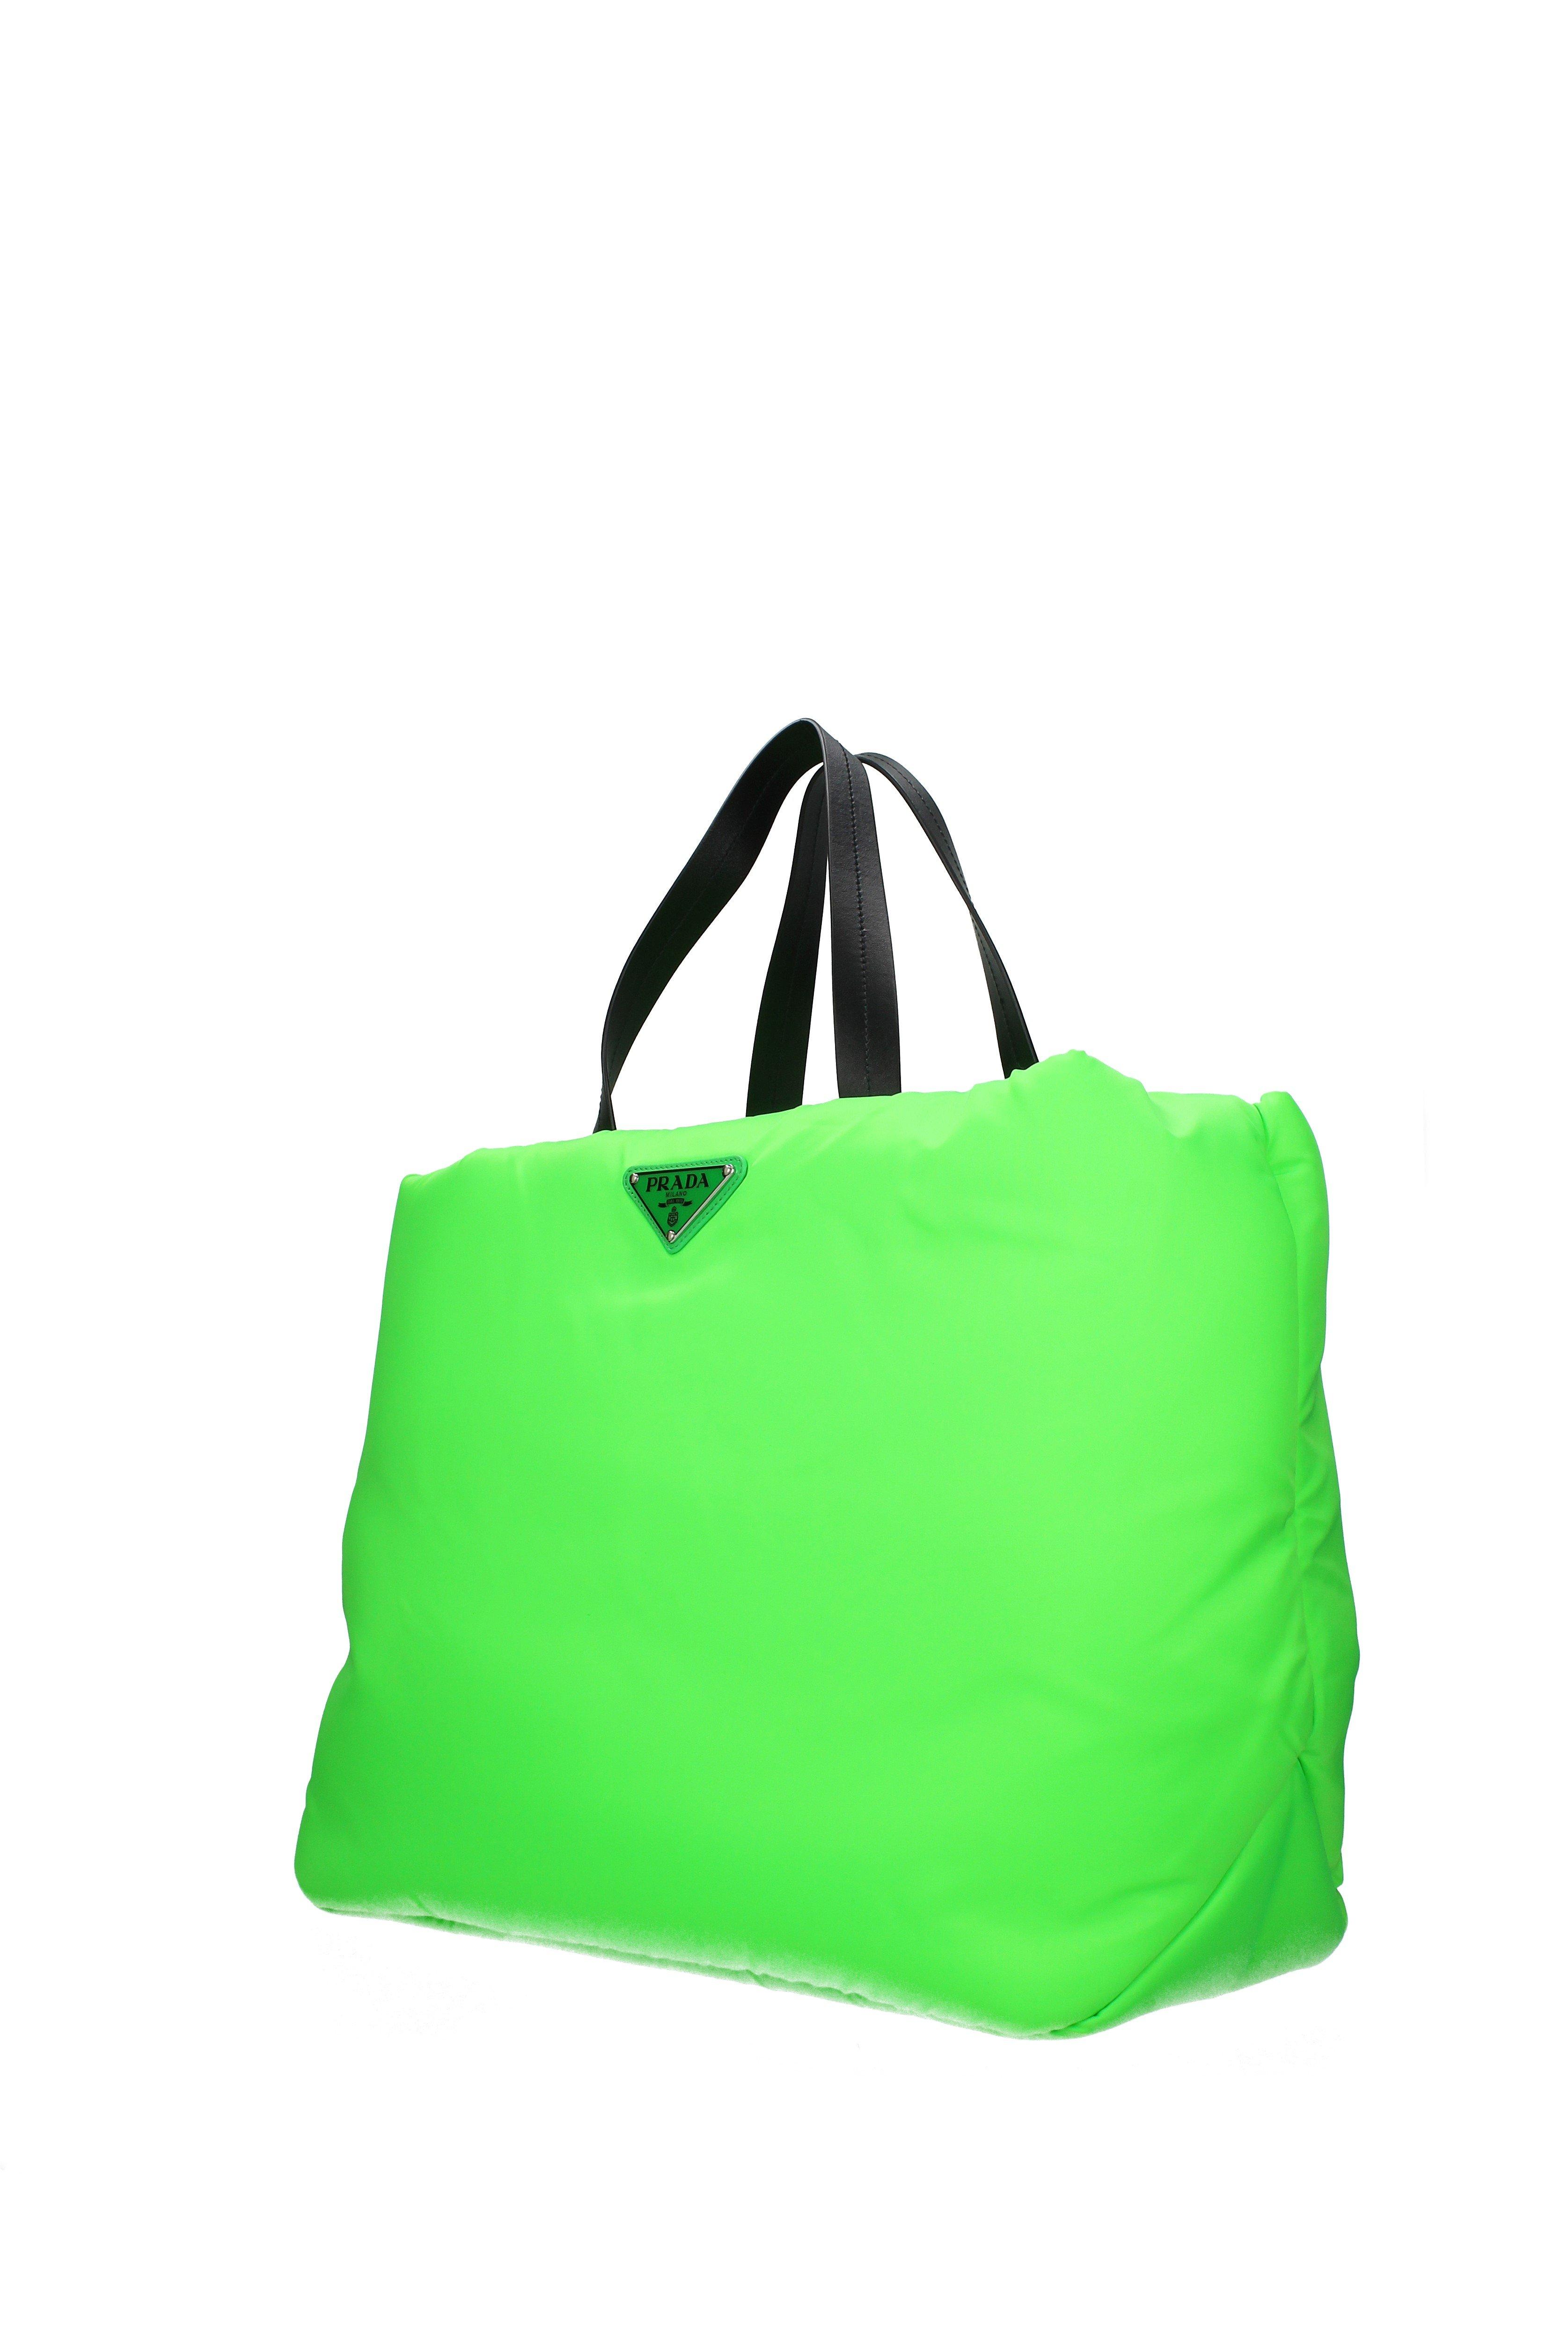 green prada nylon bag